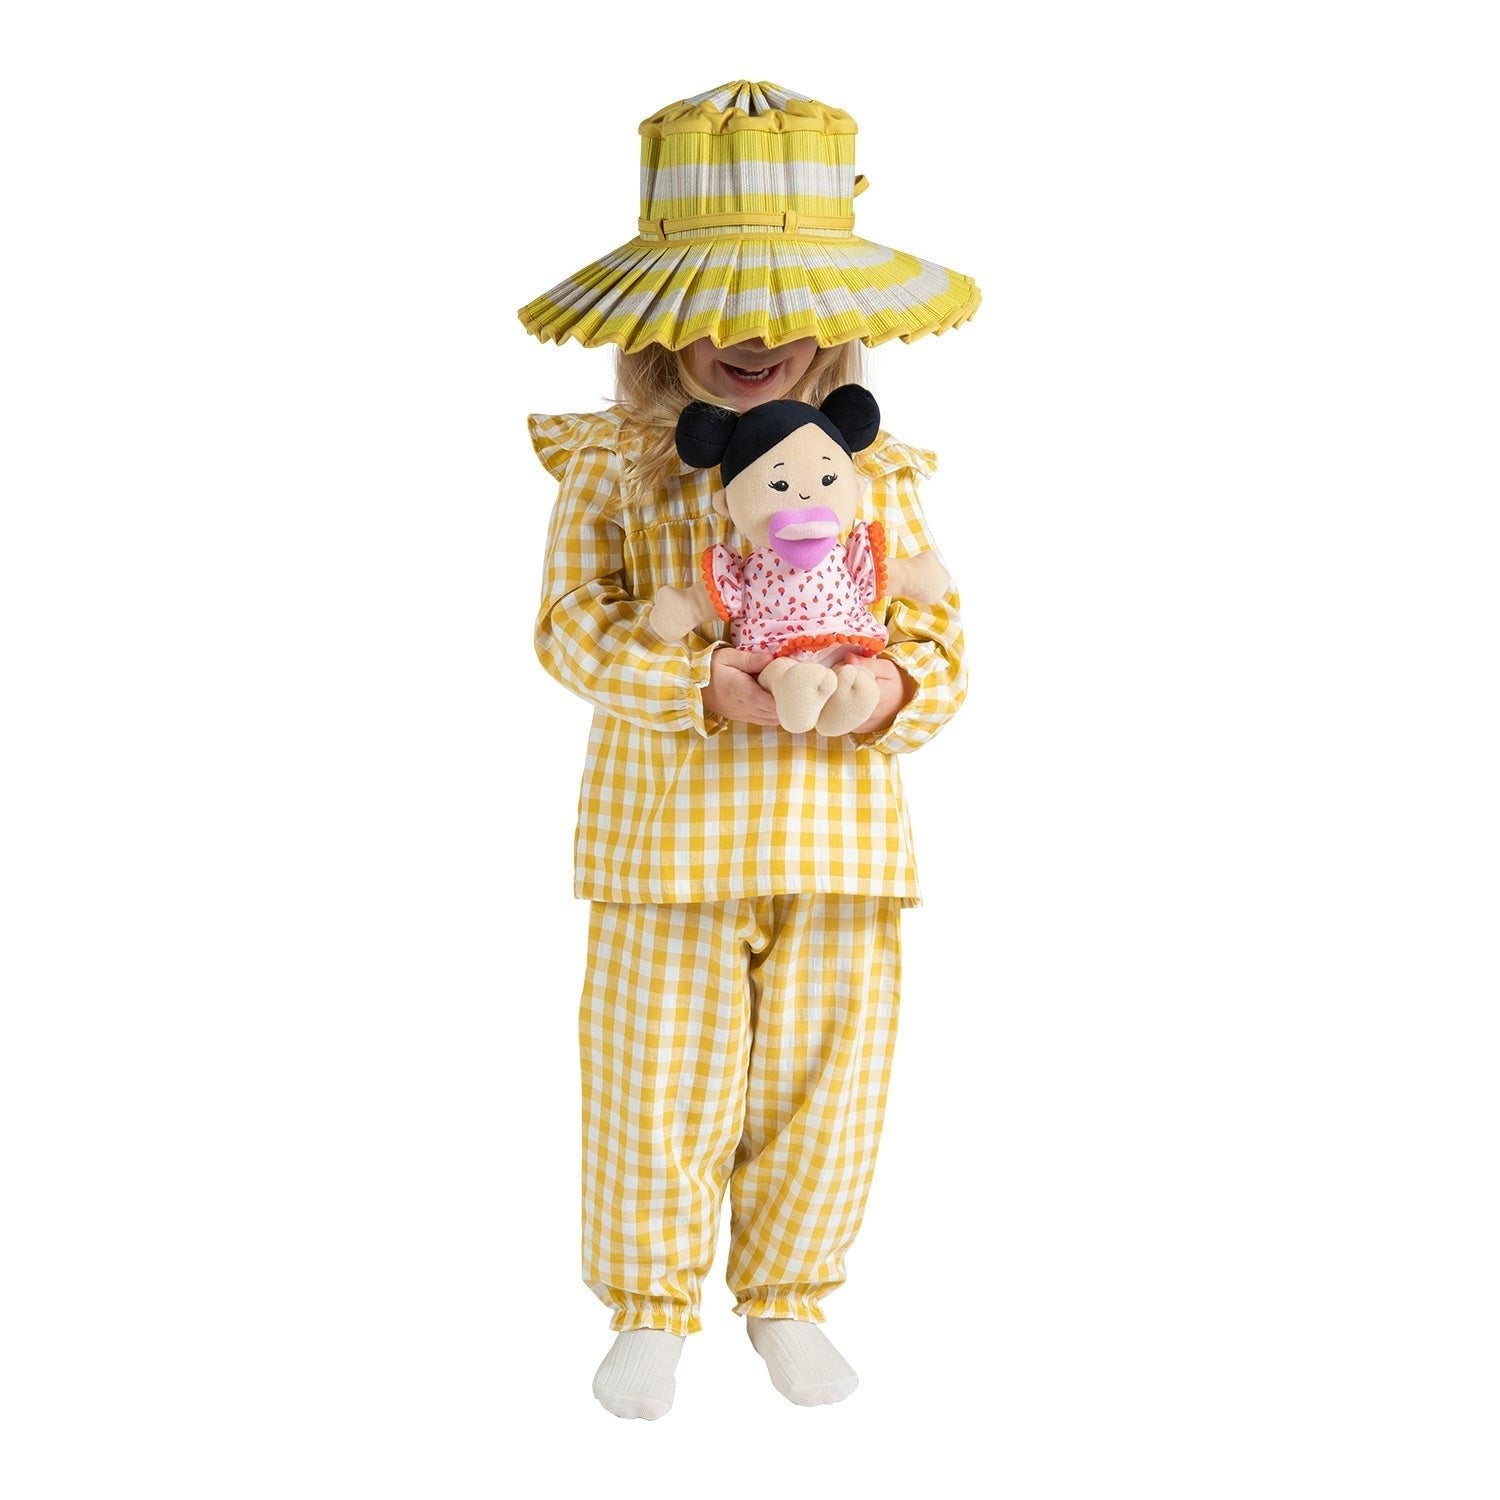 Manhattan Toy Wee Baby Stella Light Beige With Black Buns - ANB Baby -011964516537$20 - $50